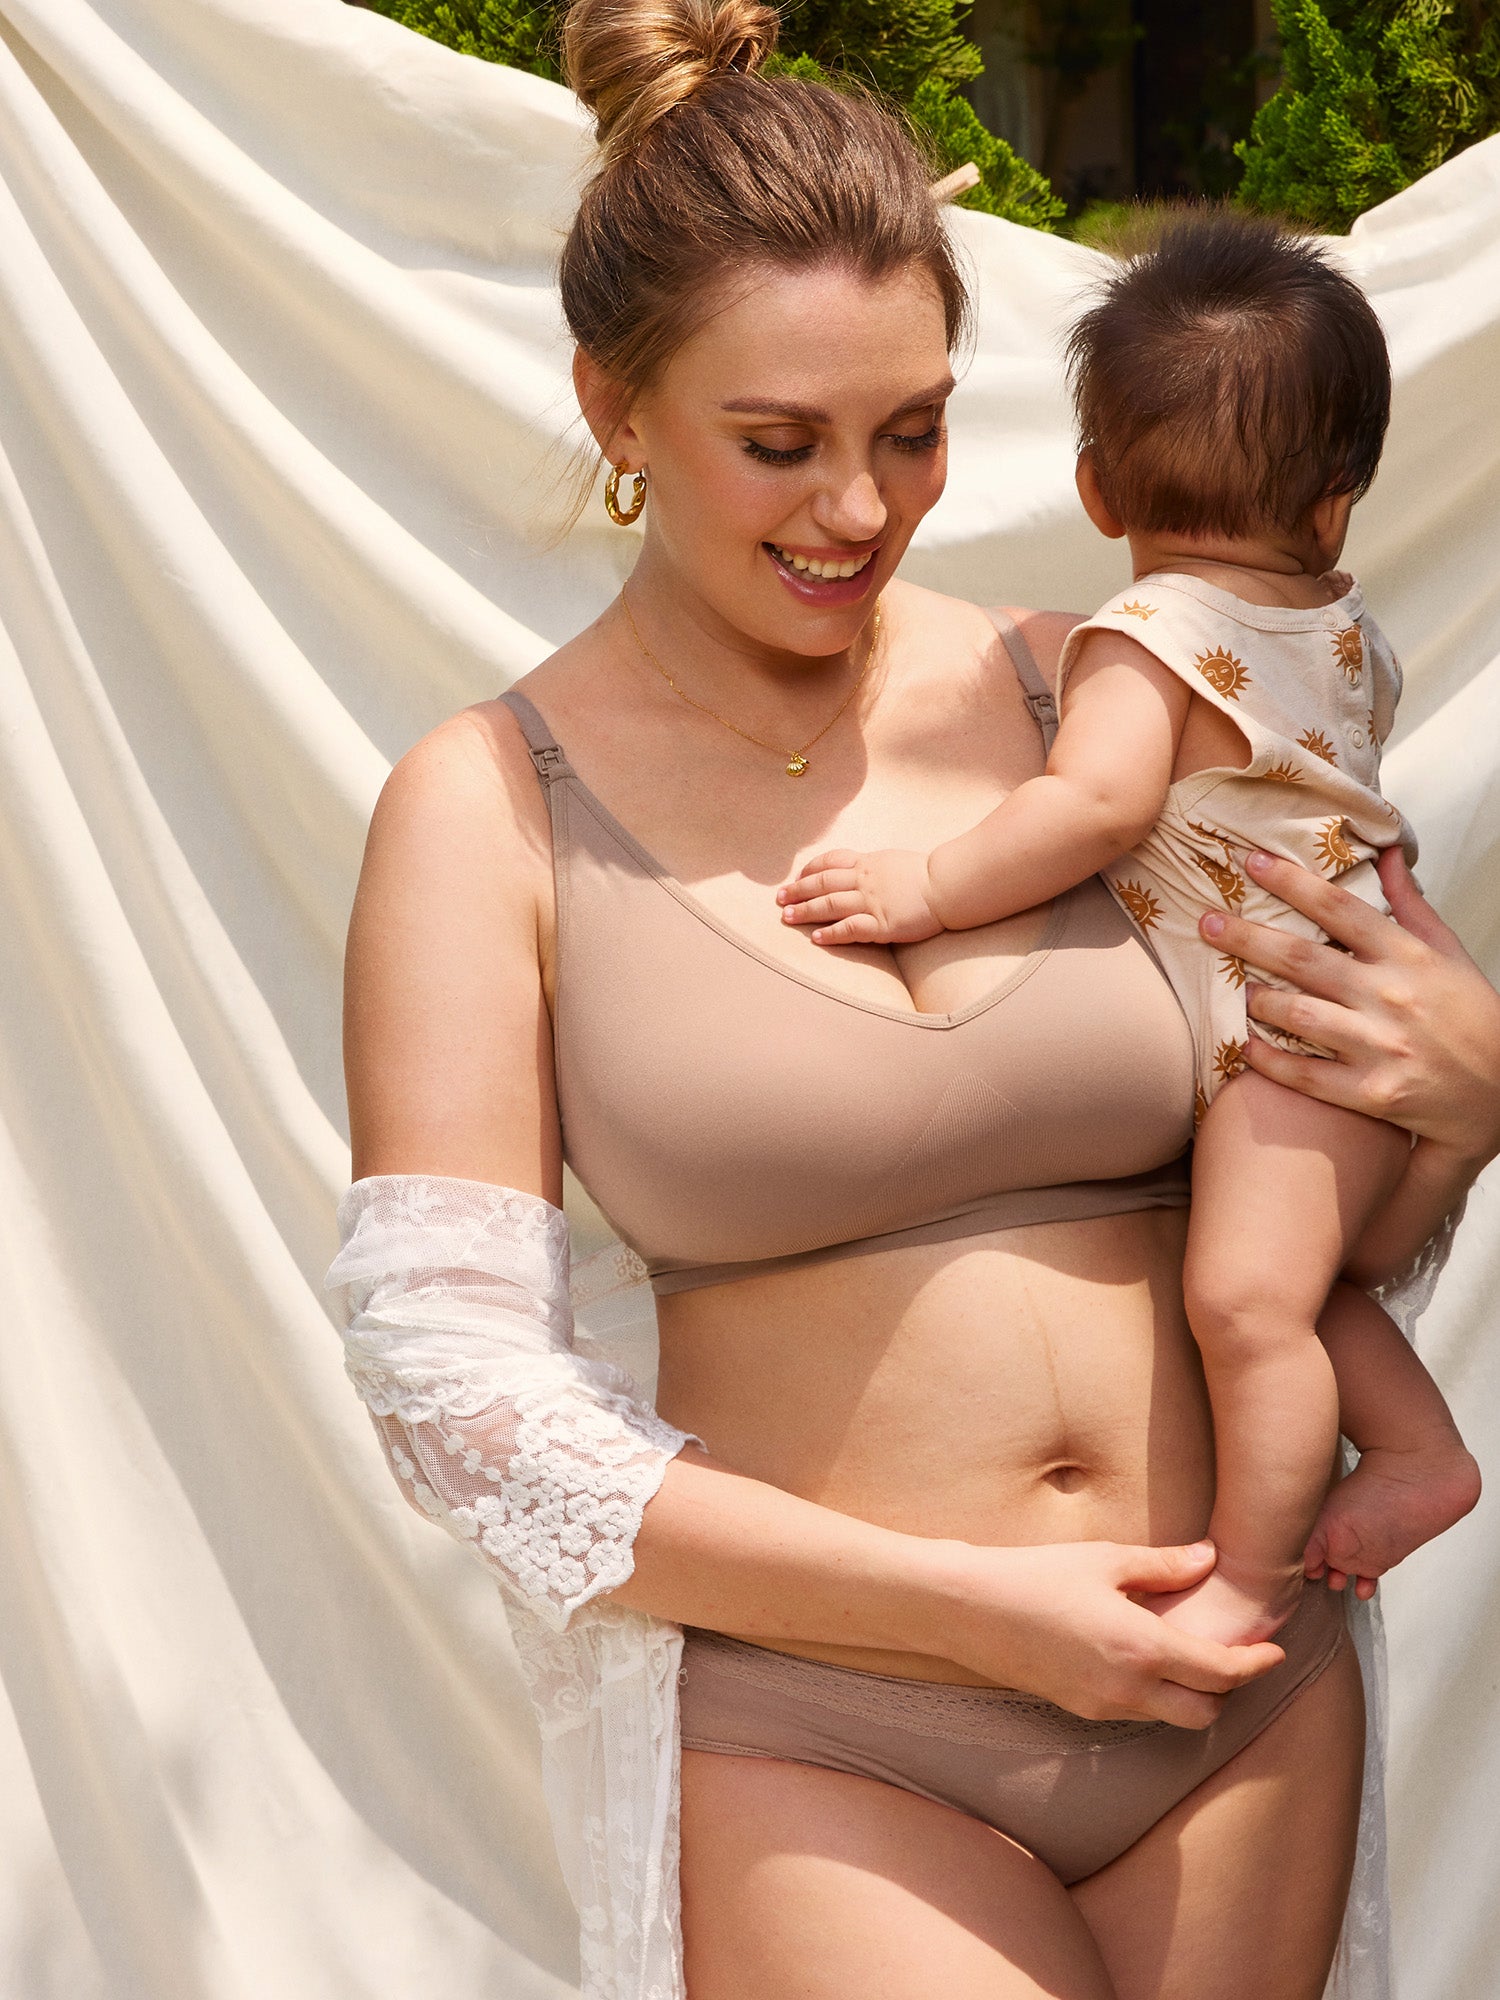 Seamless nursing bra – Ohma! Maternitywear